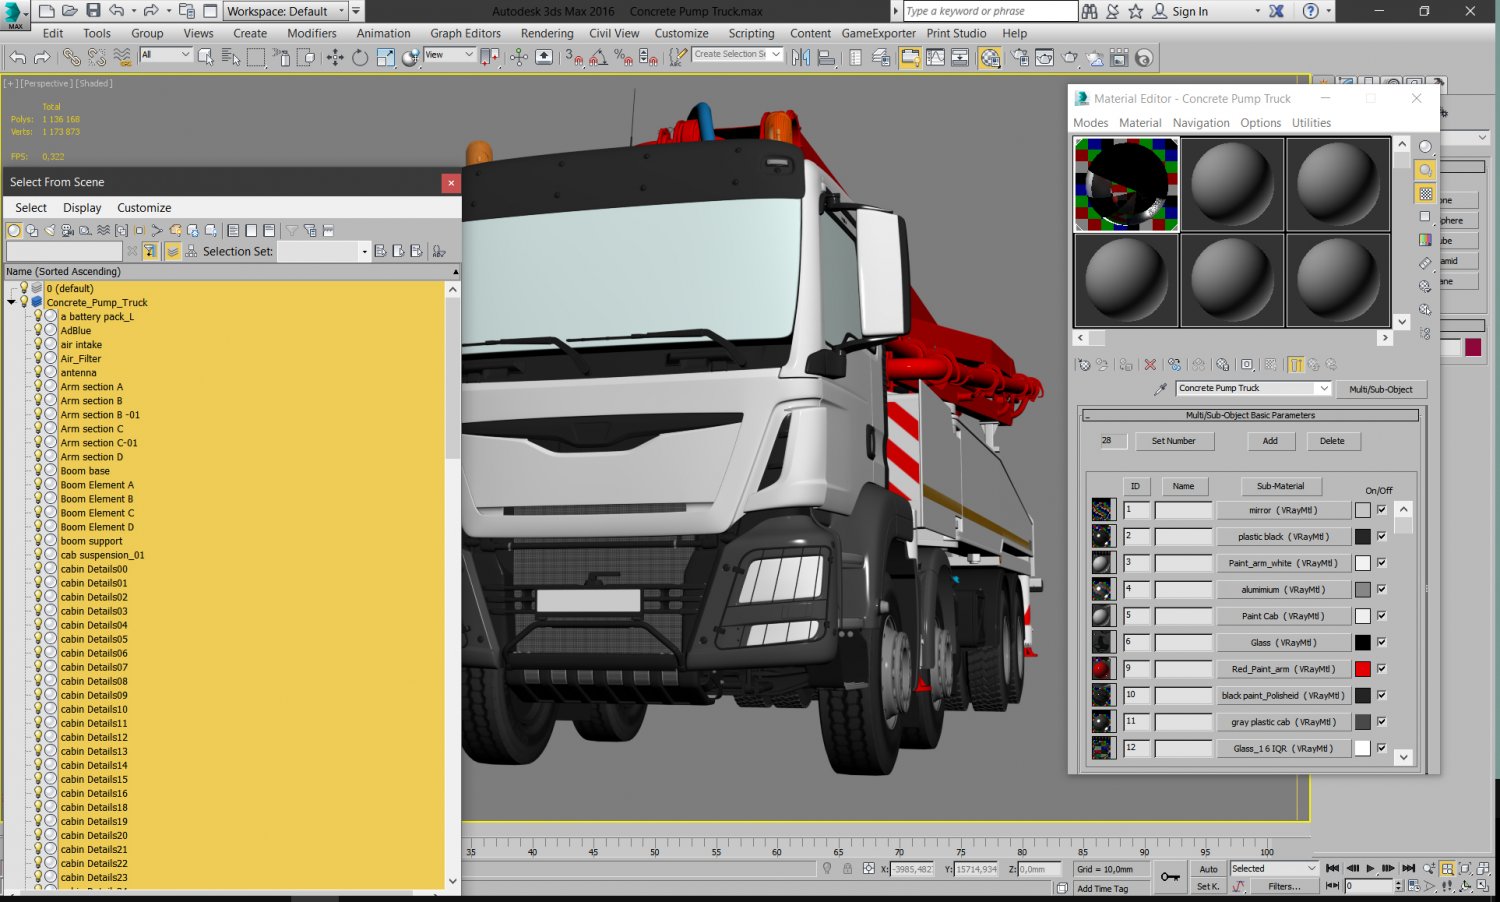 3ds max truck fmx multilift